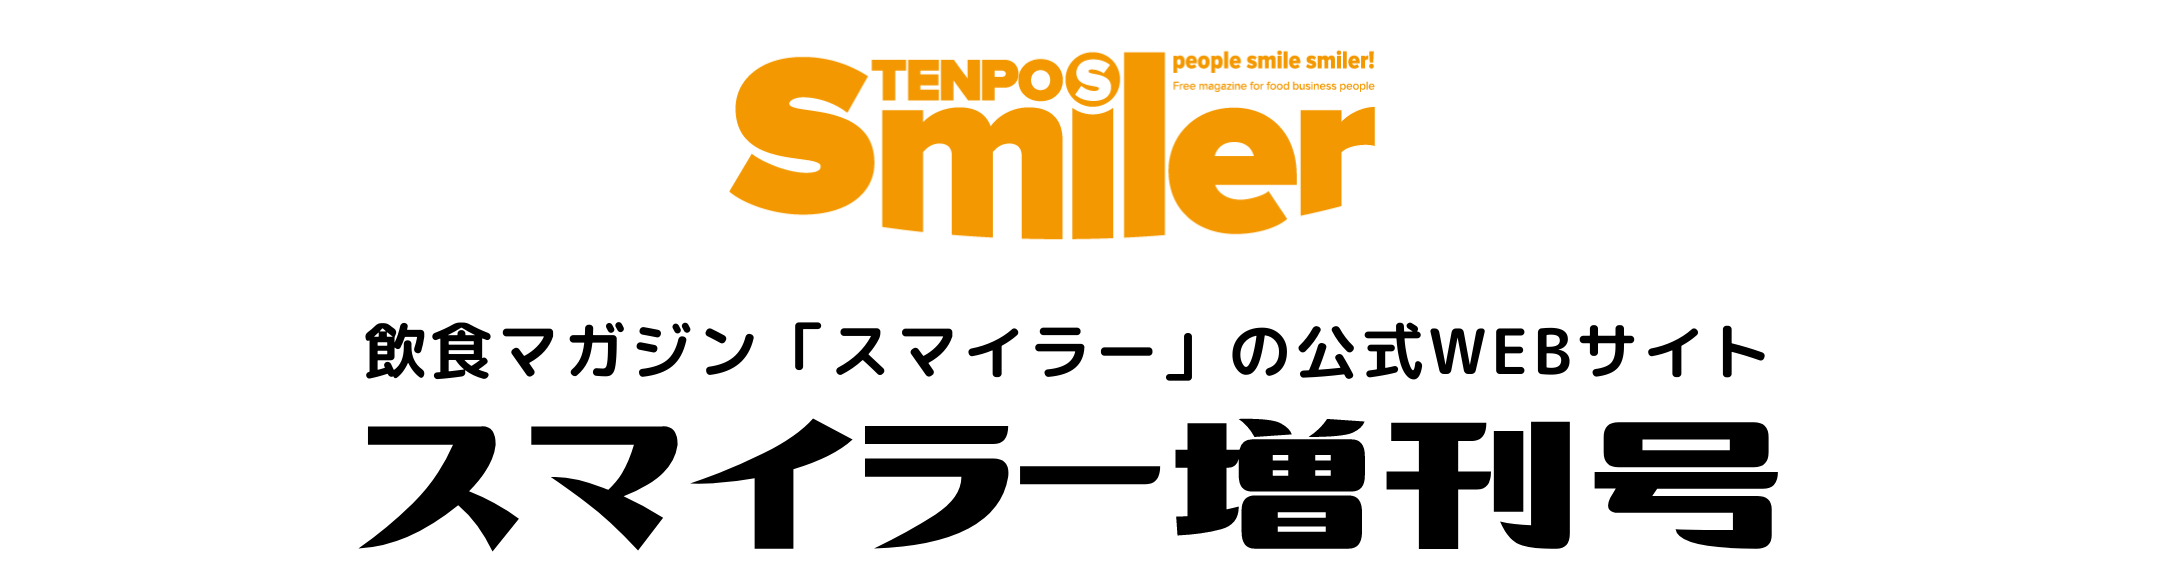 Smiler.jp